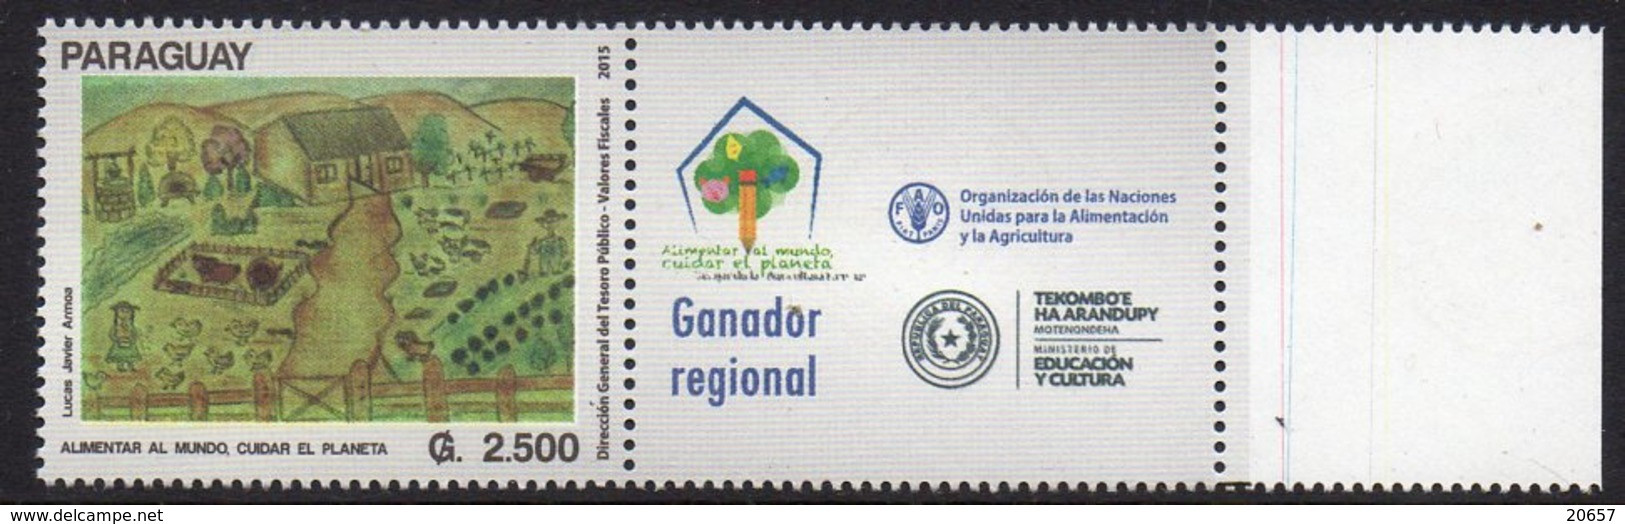 Paraguay 3203 FAO ONU Alimentation - Contro La Fame